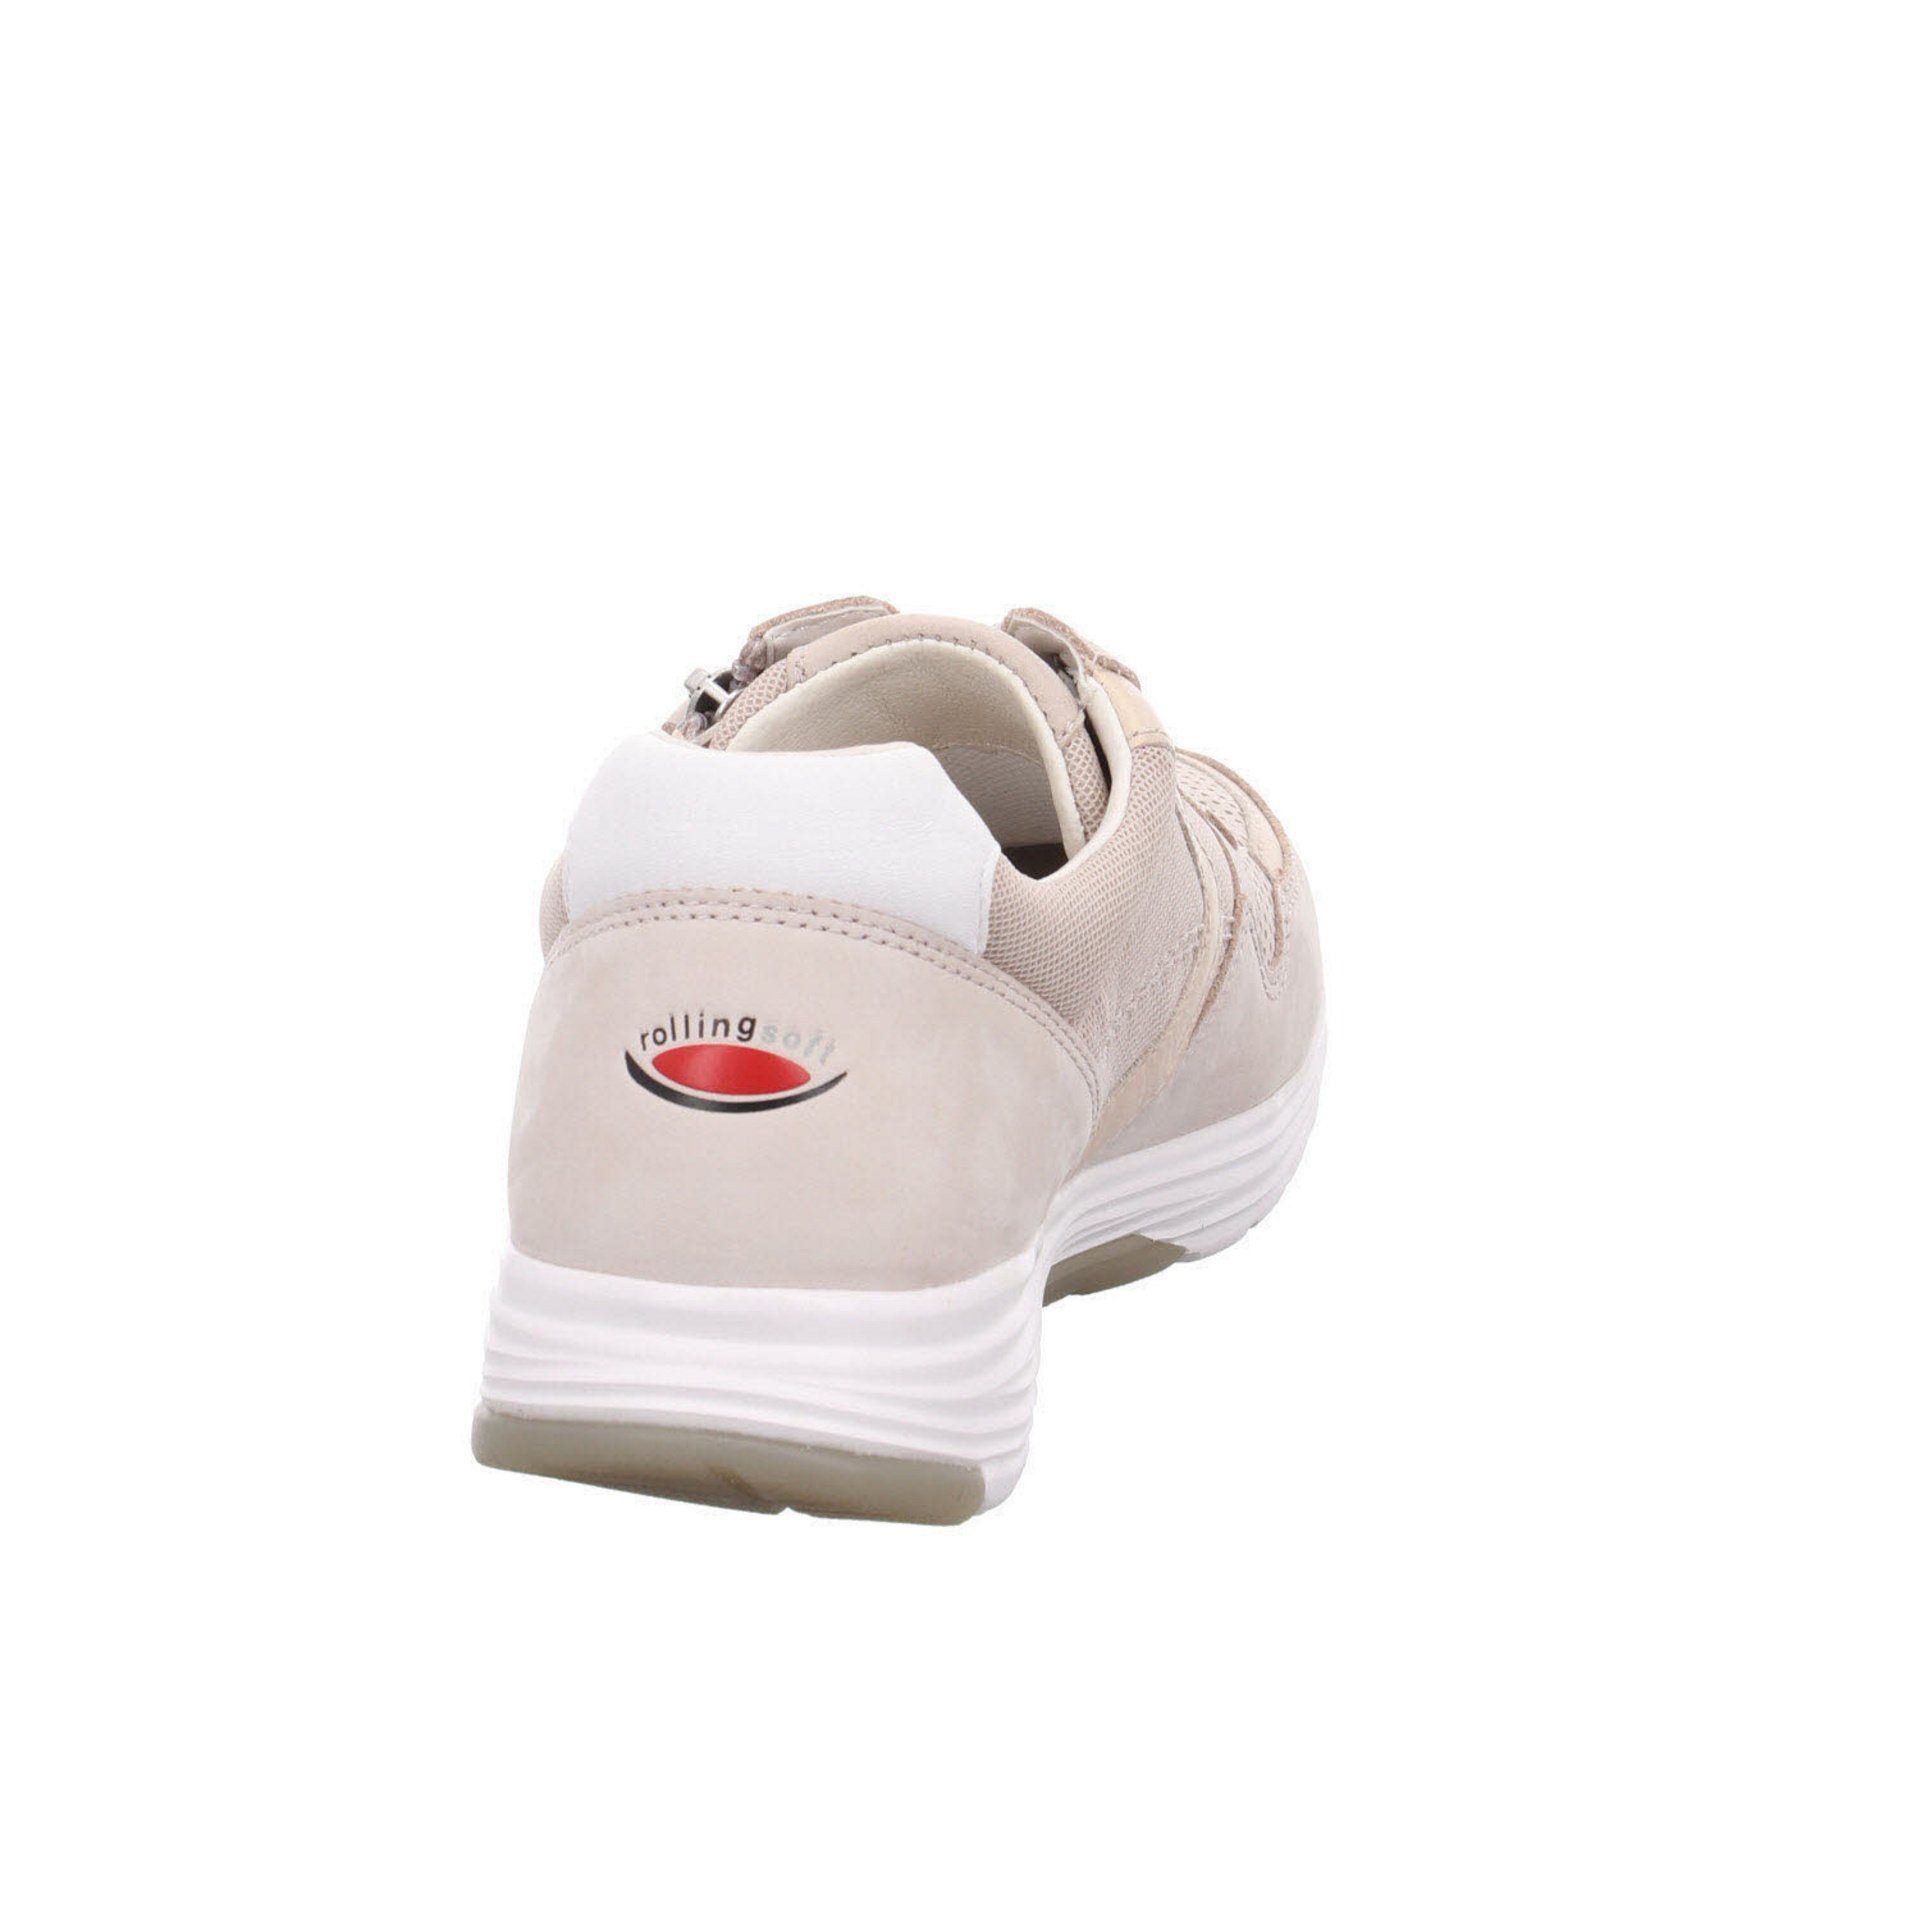 Damen Gabor 31) Schuhe Leder-/Textilkombination / Rollingsoft Sneaker Beige Sneaker (puder/weiss Schnürschuh